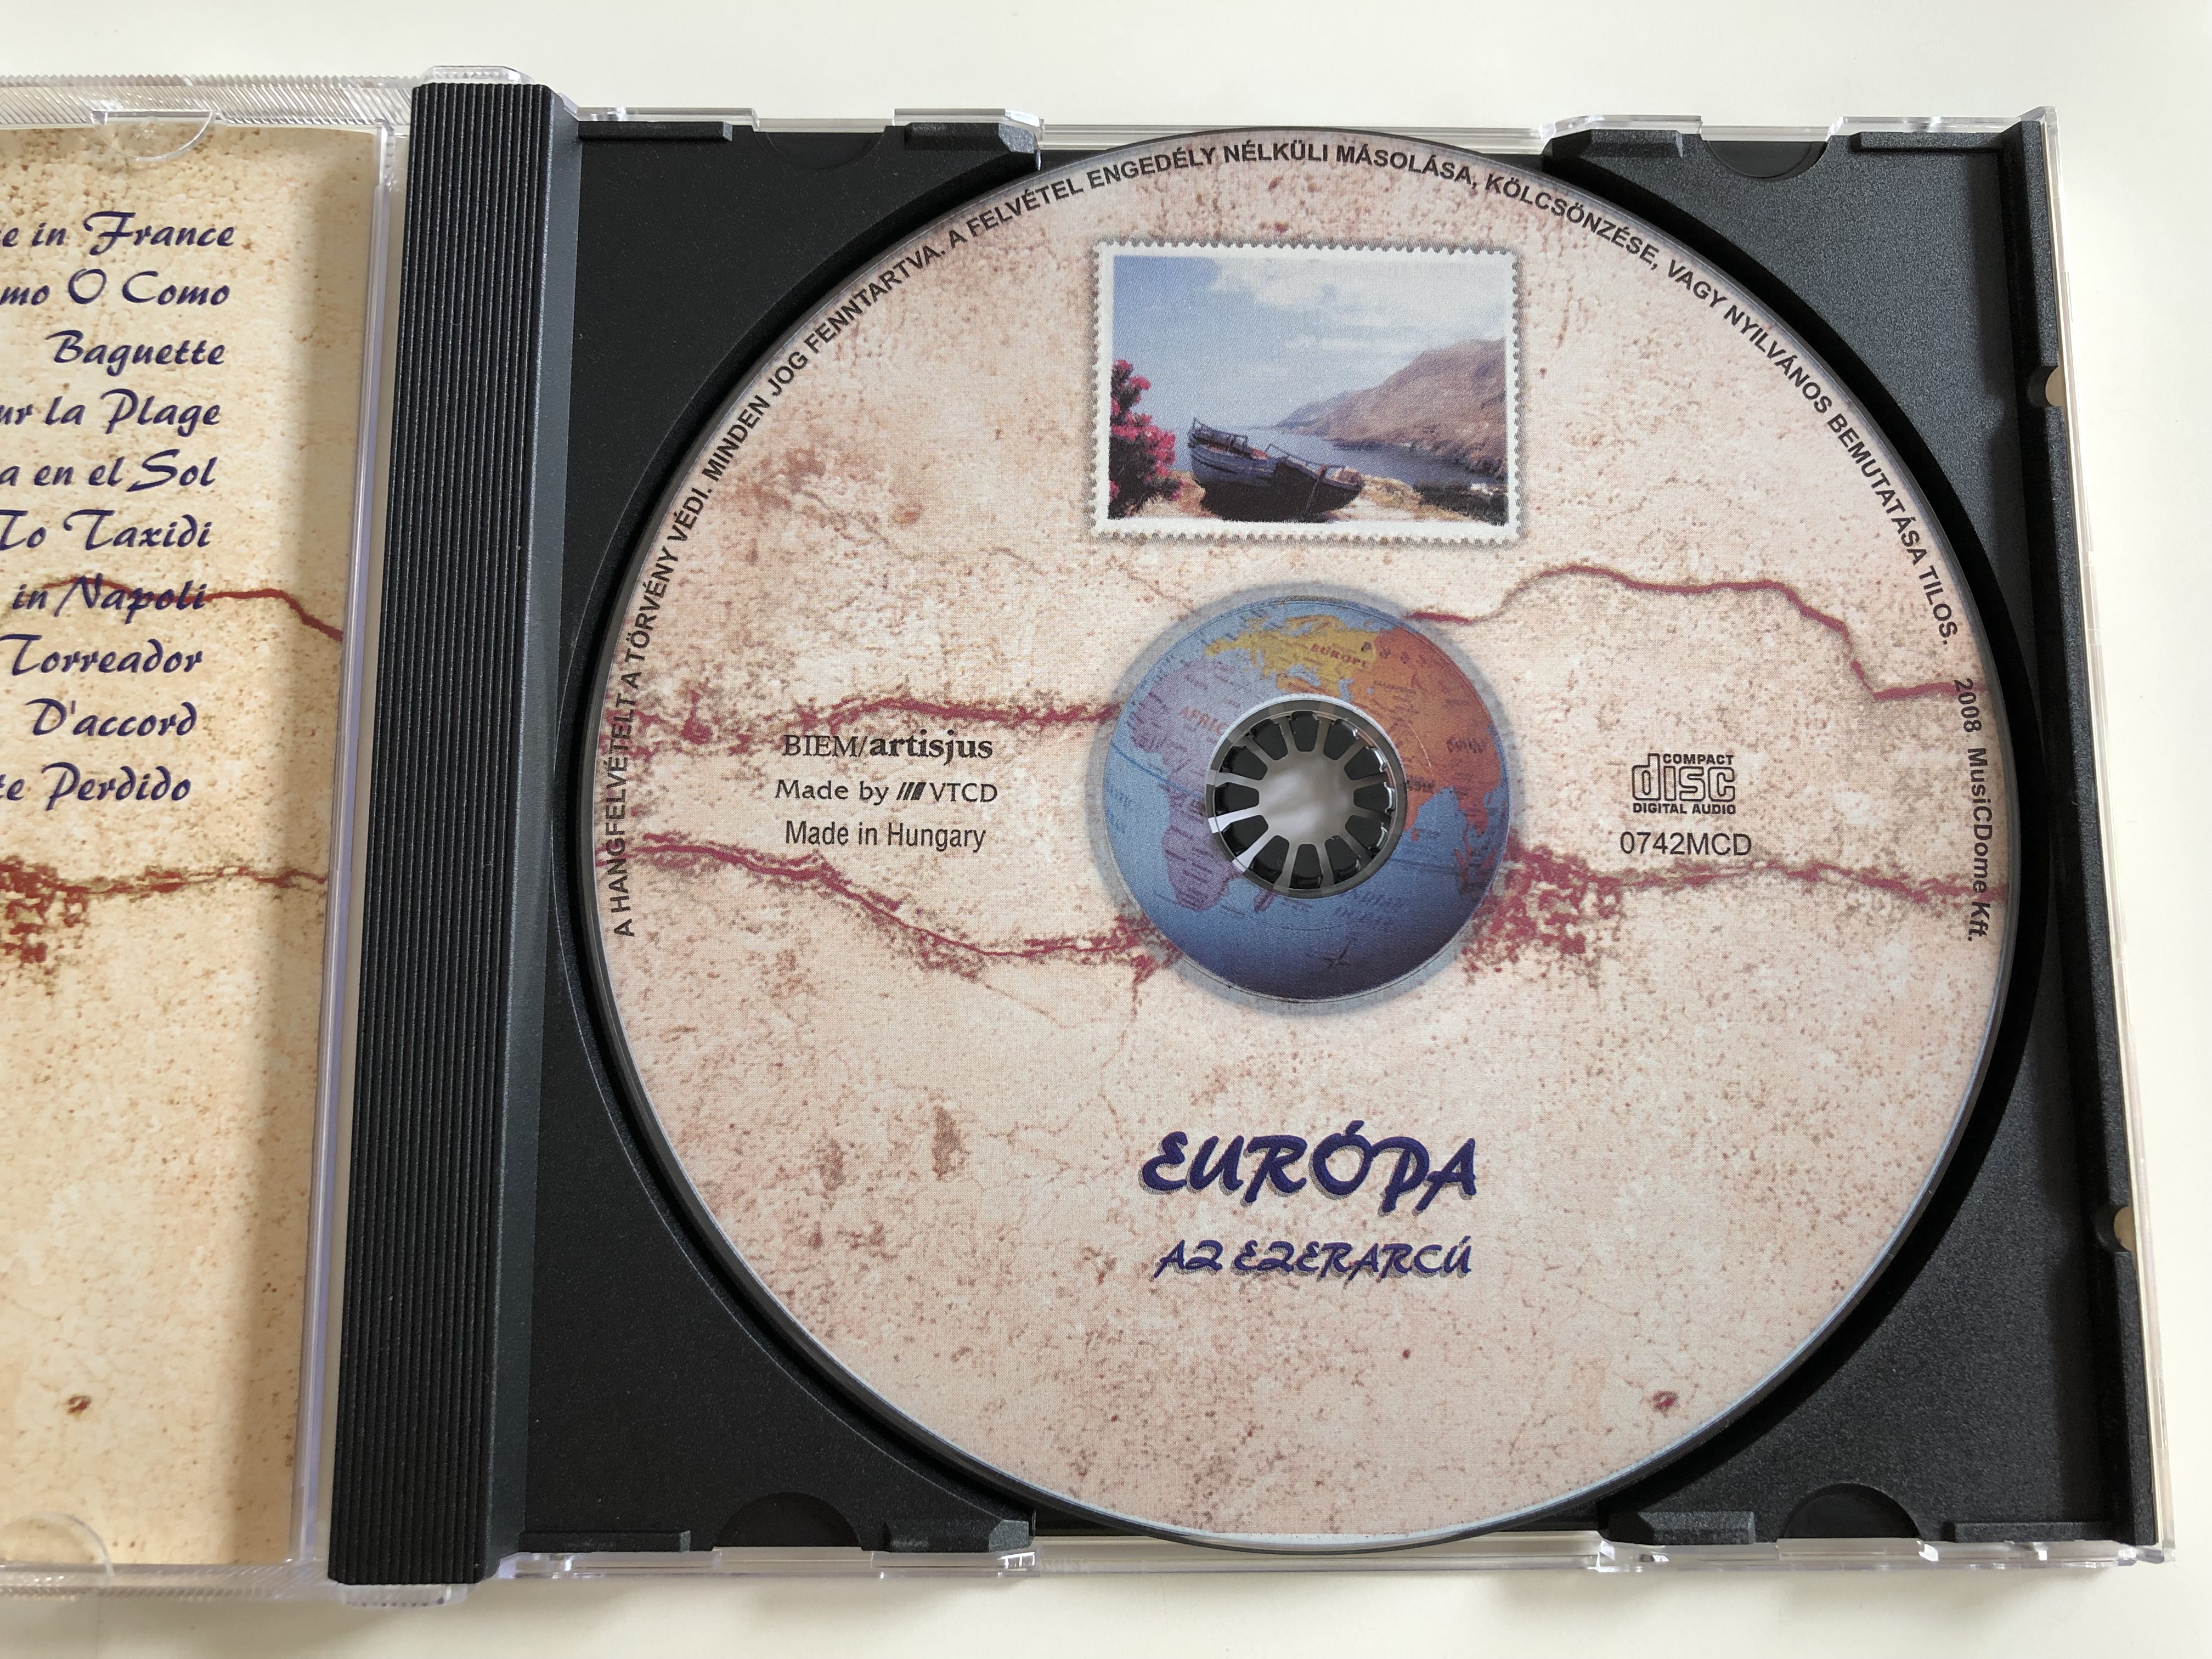 europa-az-ezerarcu-franciaorszag-olaszorszag-spanyolorszag-musicdome-kft.-audio-cd-0742mcd-3-.jpg